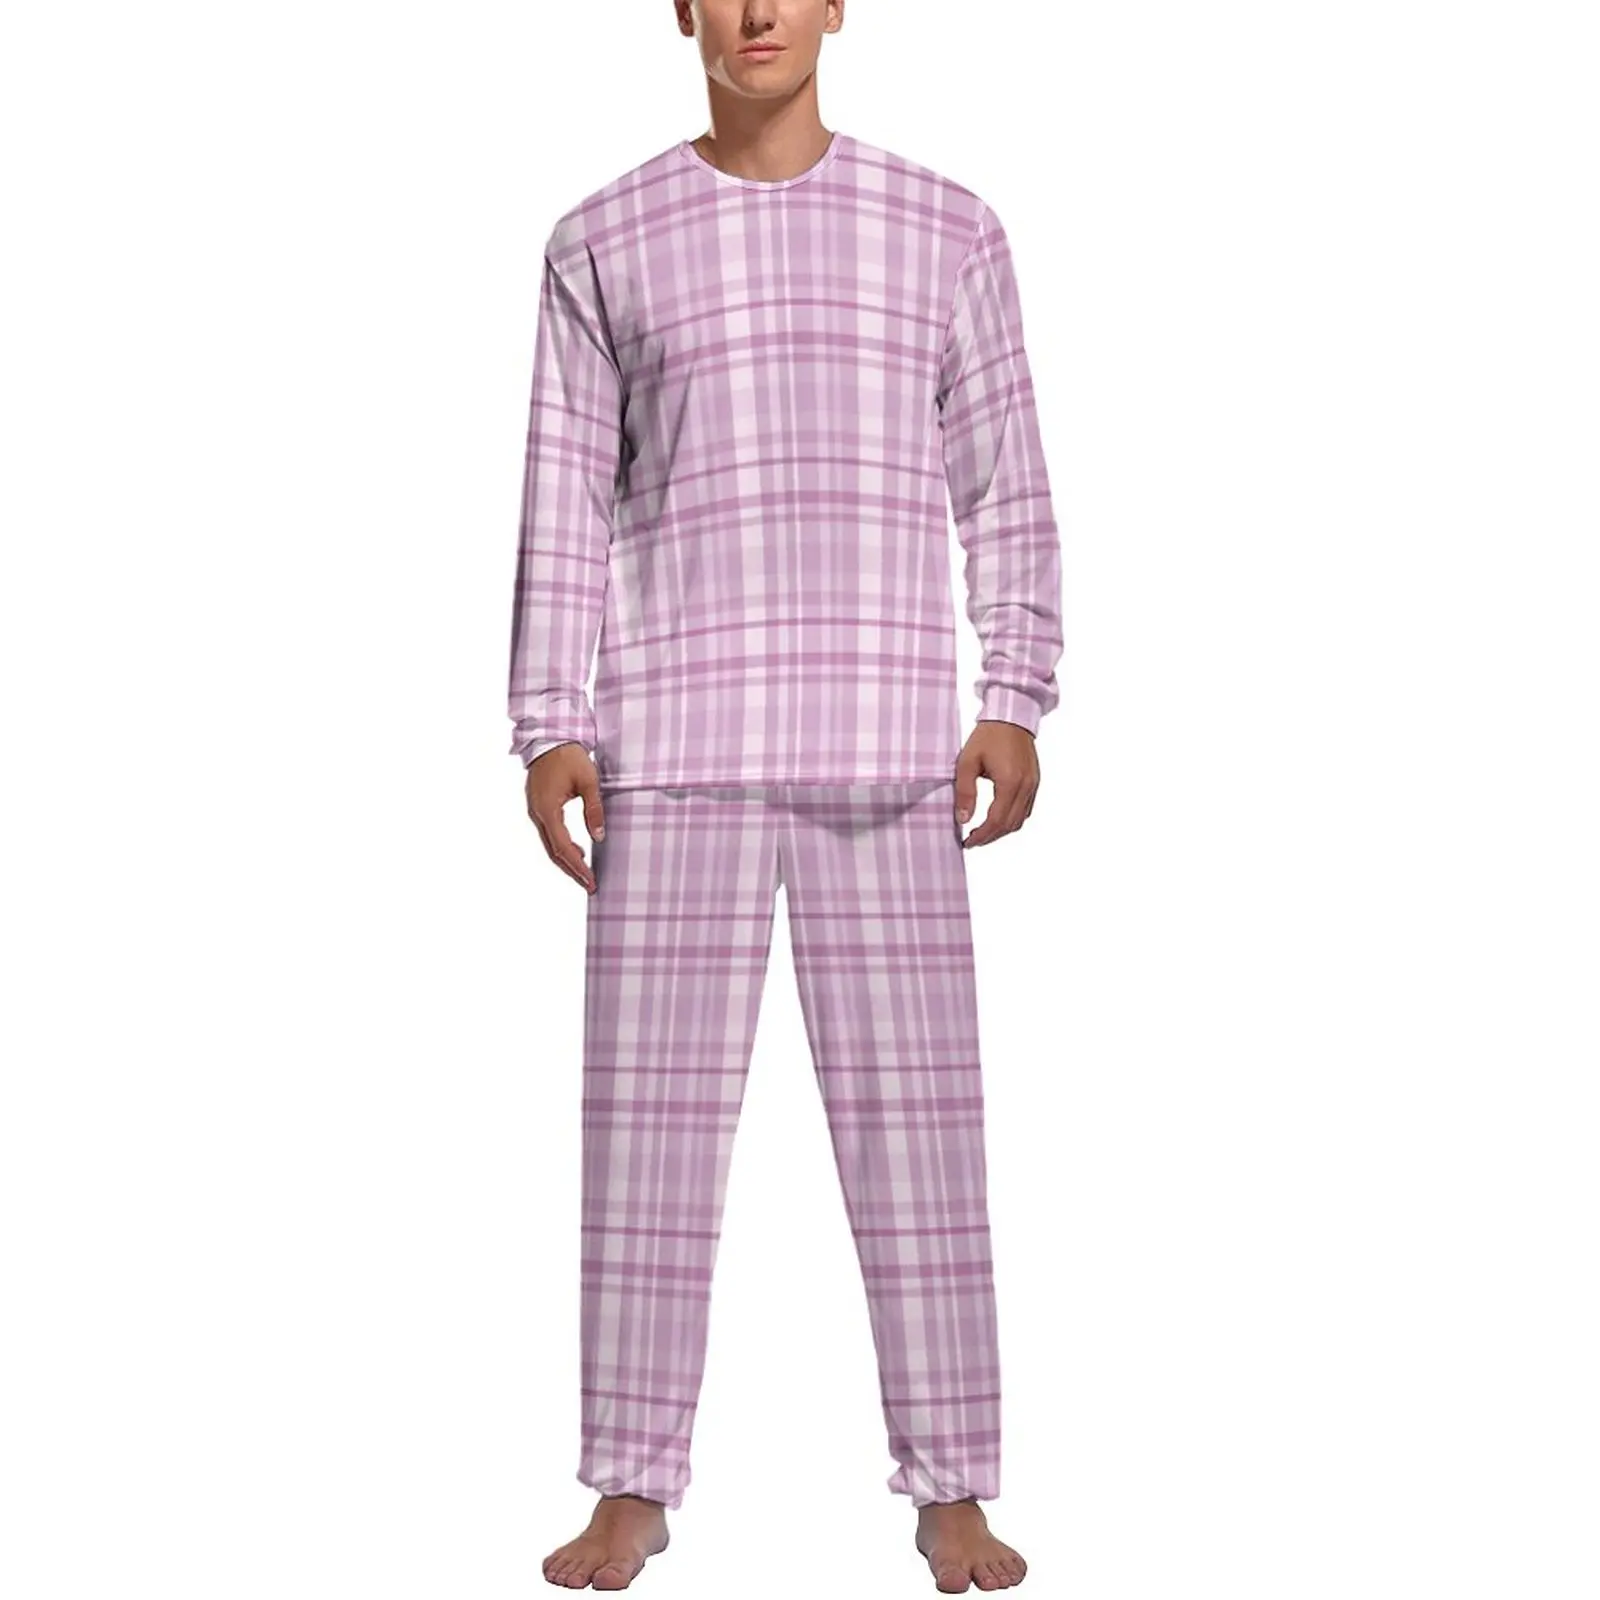 Lavender Purple Plaid Pajamas Daily 2 Pieces Pink Lines Print Romantic Pajama Sets Man Long Sleeves Room Graphic Nightwear